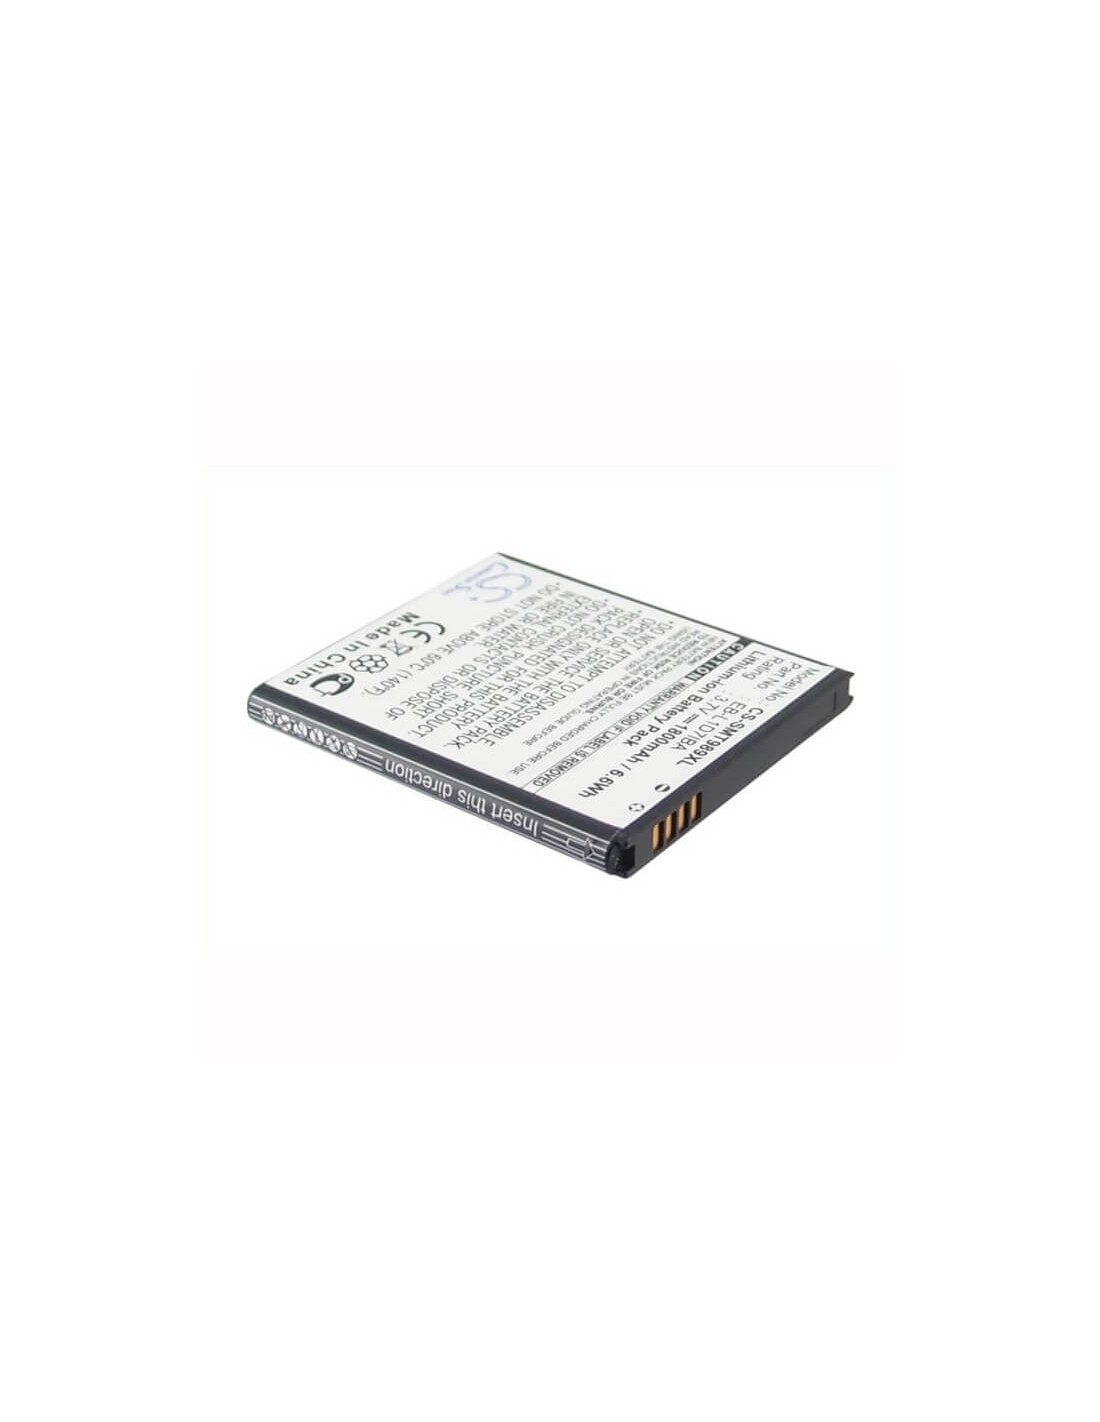 Battery for Samsung Galaxy S Hercules, SGH-T989, Skyrocket 3.7V, 1800mAh - 6.66Wh